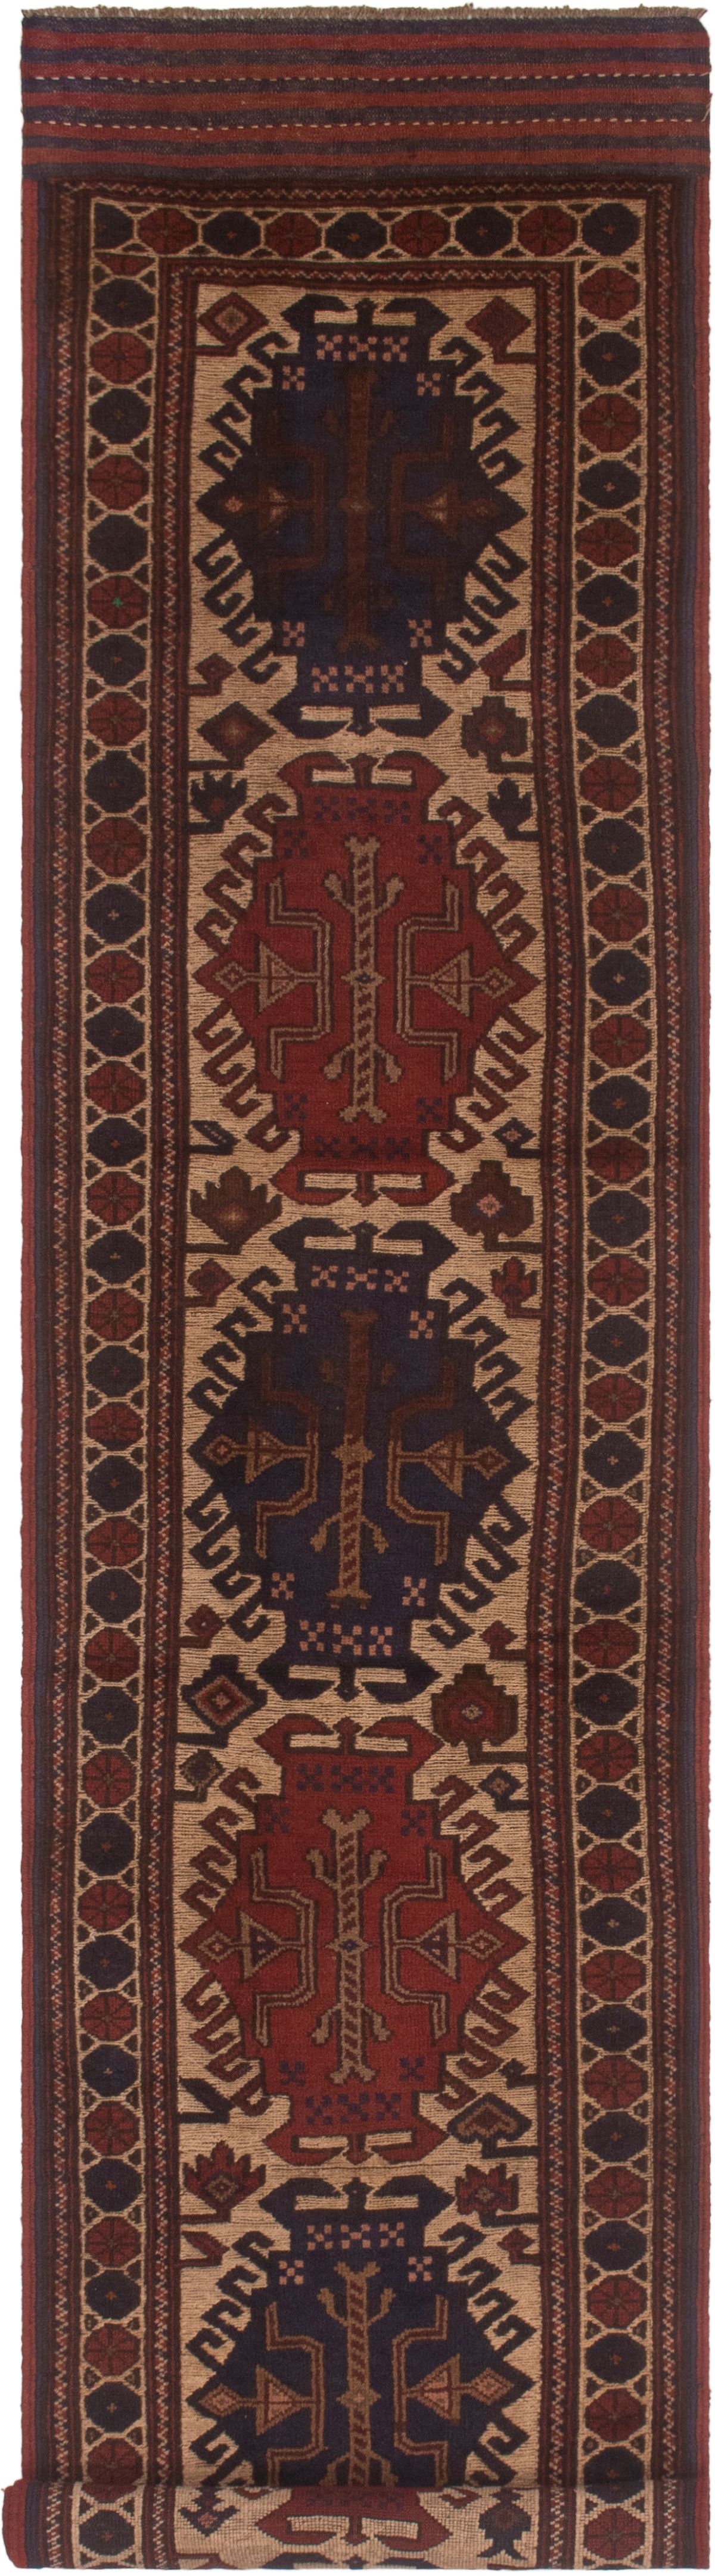 Hand-knotted Tajik Caucasian Cream Wool Rug 2'6" x 12'4" Size: 2'6" x 12'4"  